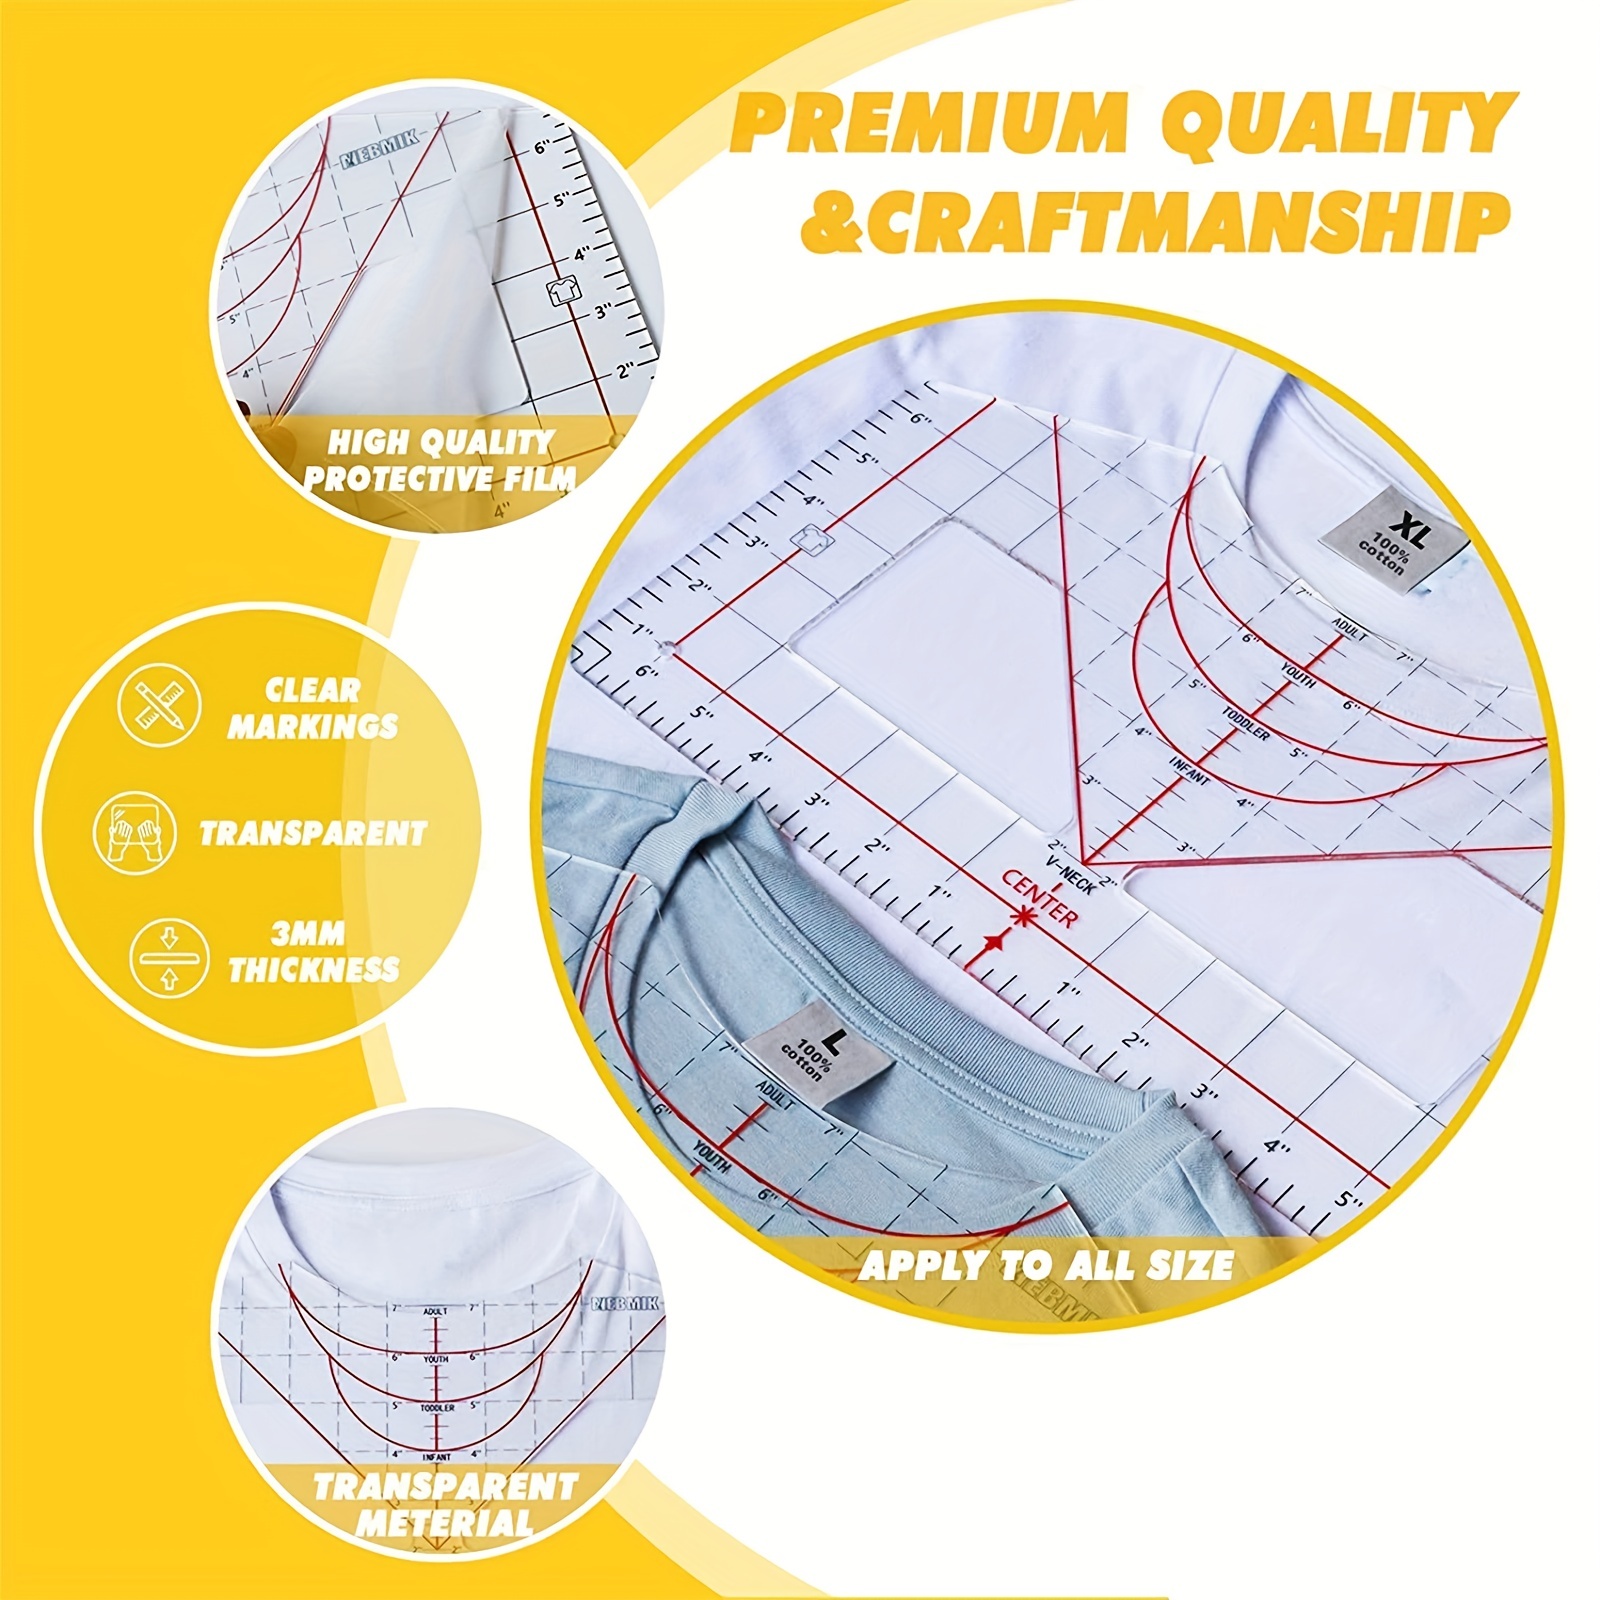 Crafty Transfer Tool Heavy Duty Aluminum T-shirt Alignment Guide